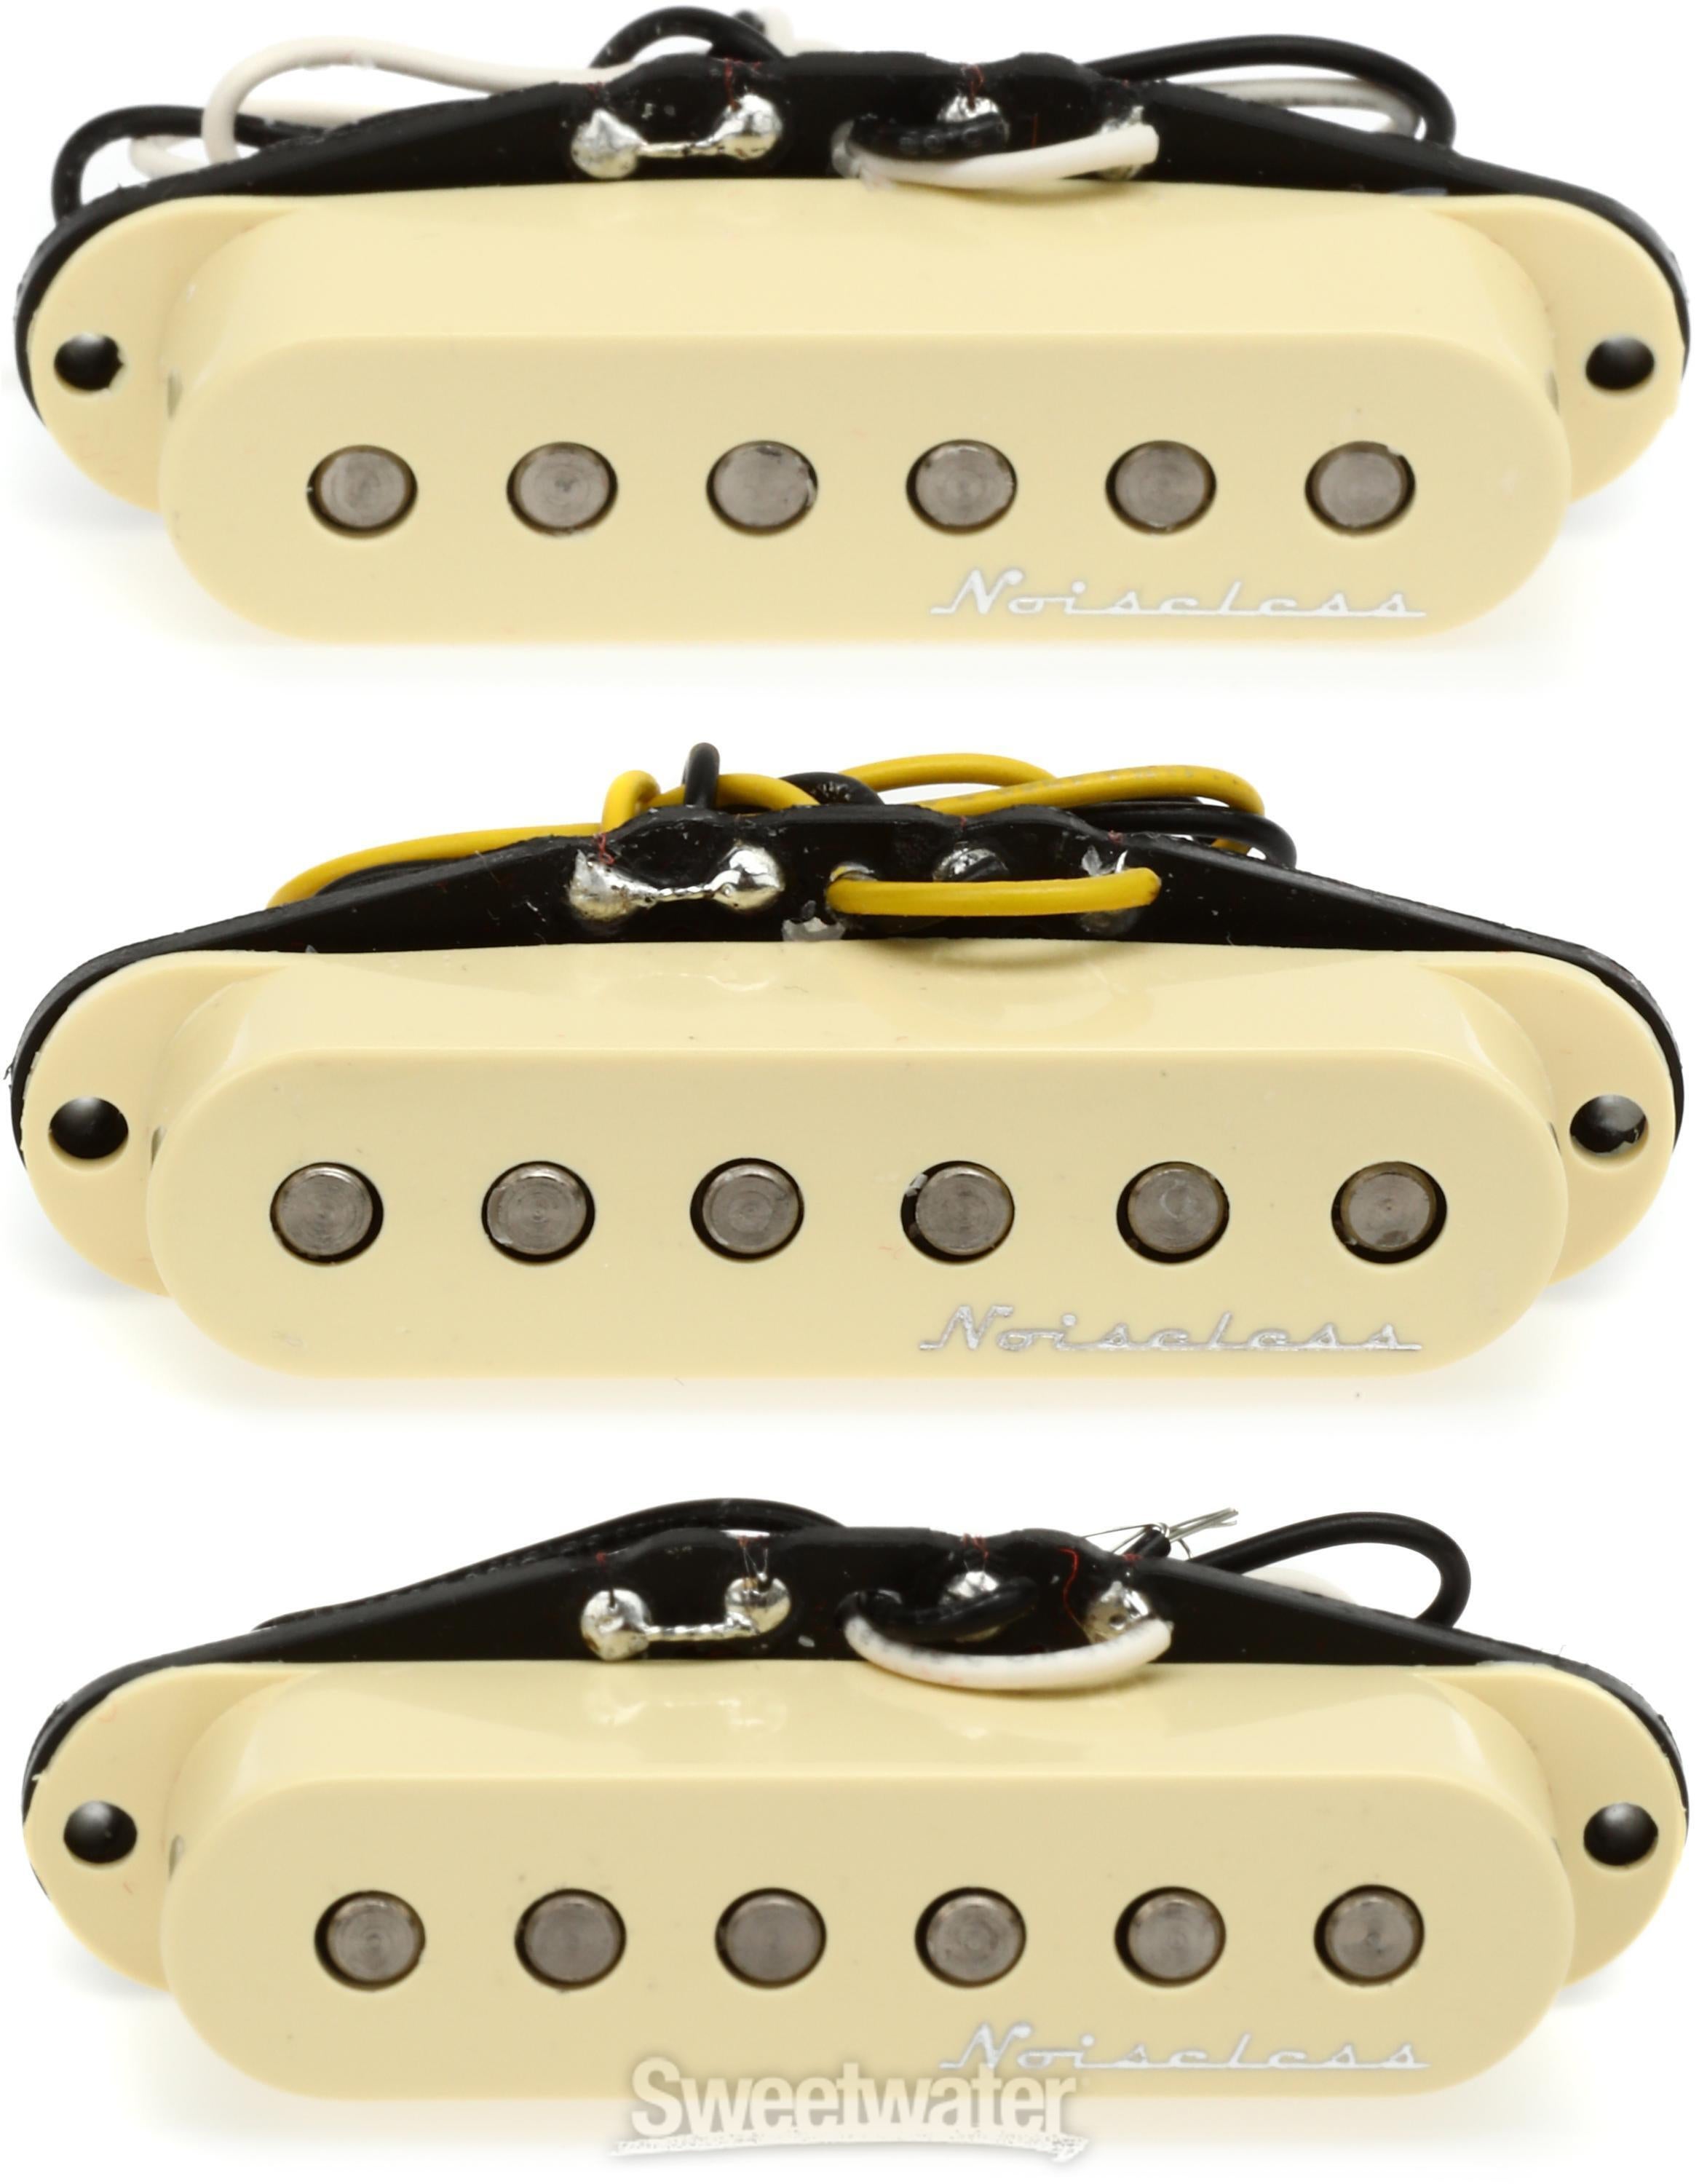 Fender Hot Noiseless Strat Single Coil 3-piece Pickup Set Reviews